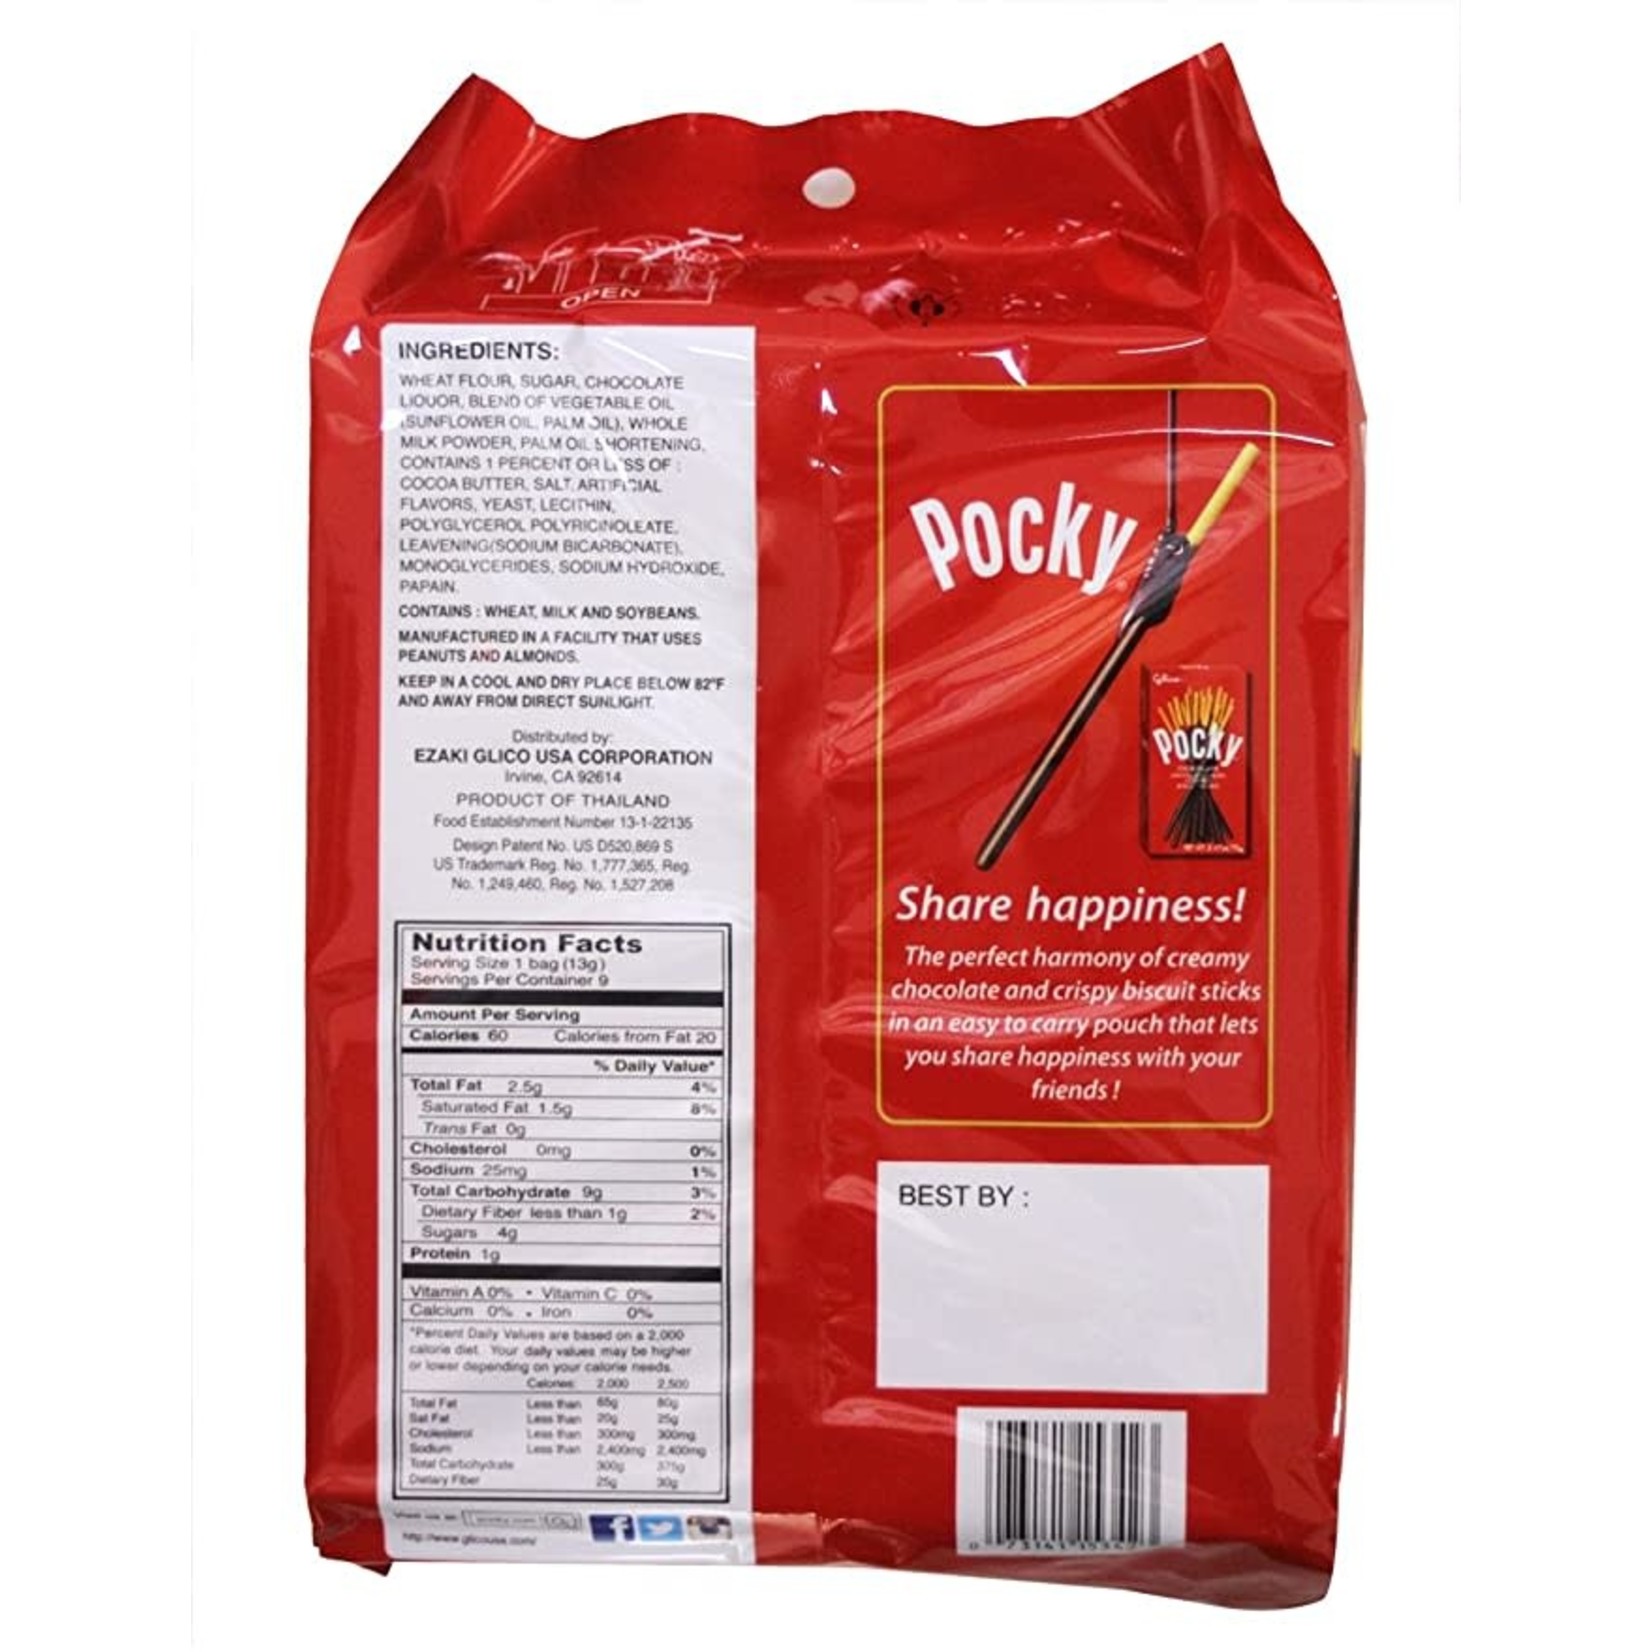 Glico Pocky - Original Chocolate 4.13oz Family Pack